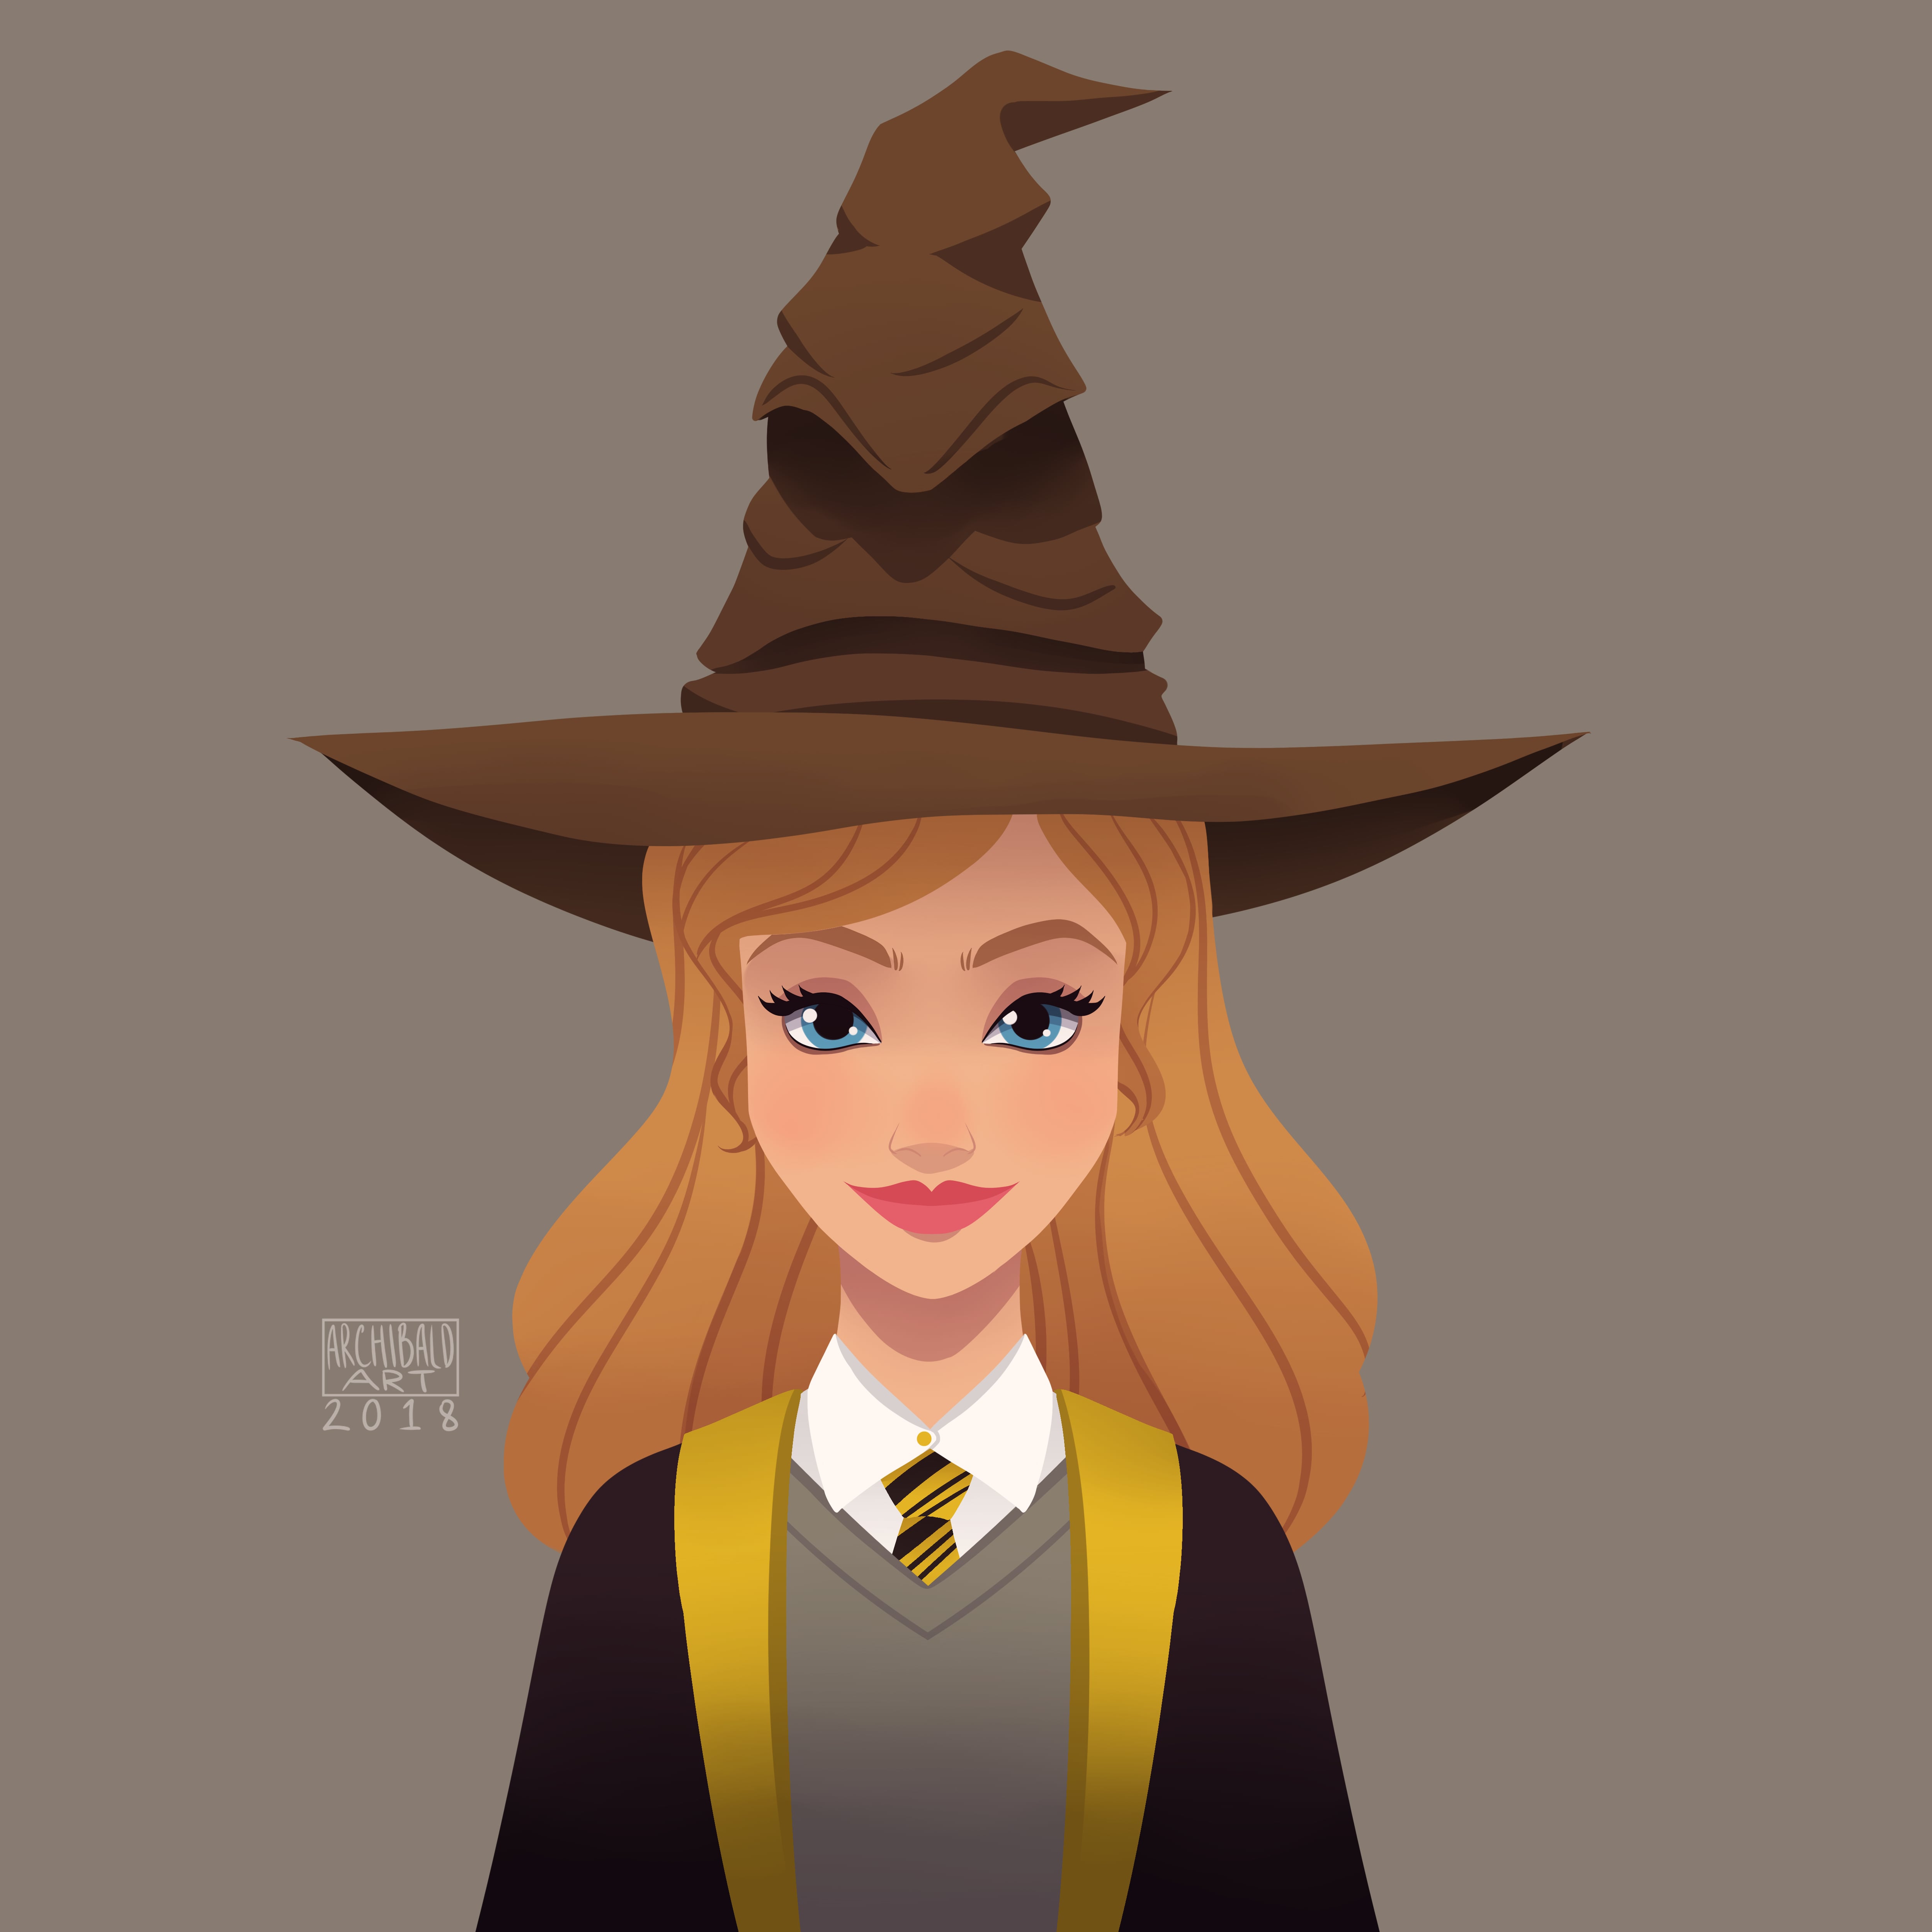 Harry Potter - Hogwarts houses - Makeup art Instagram.com